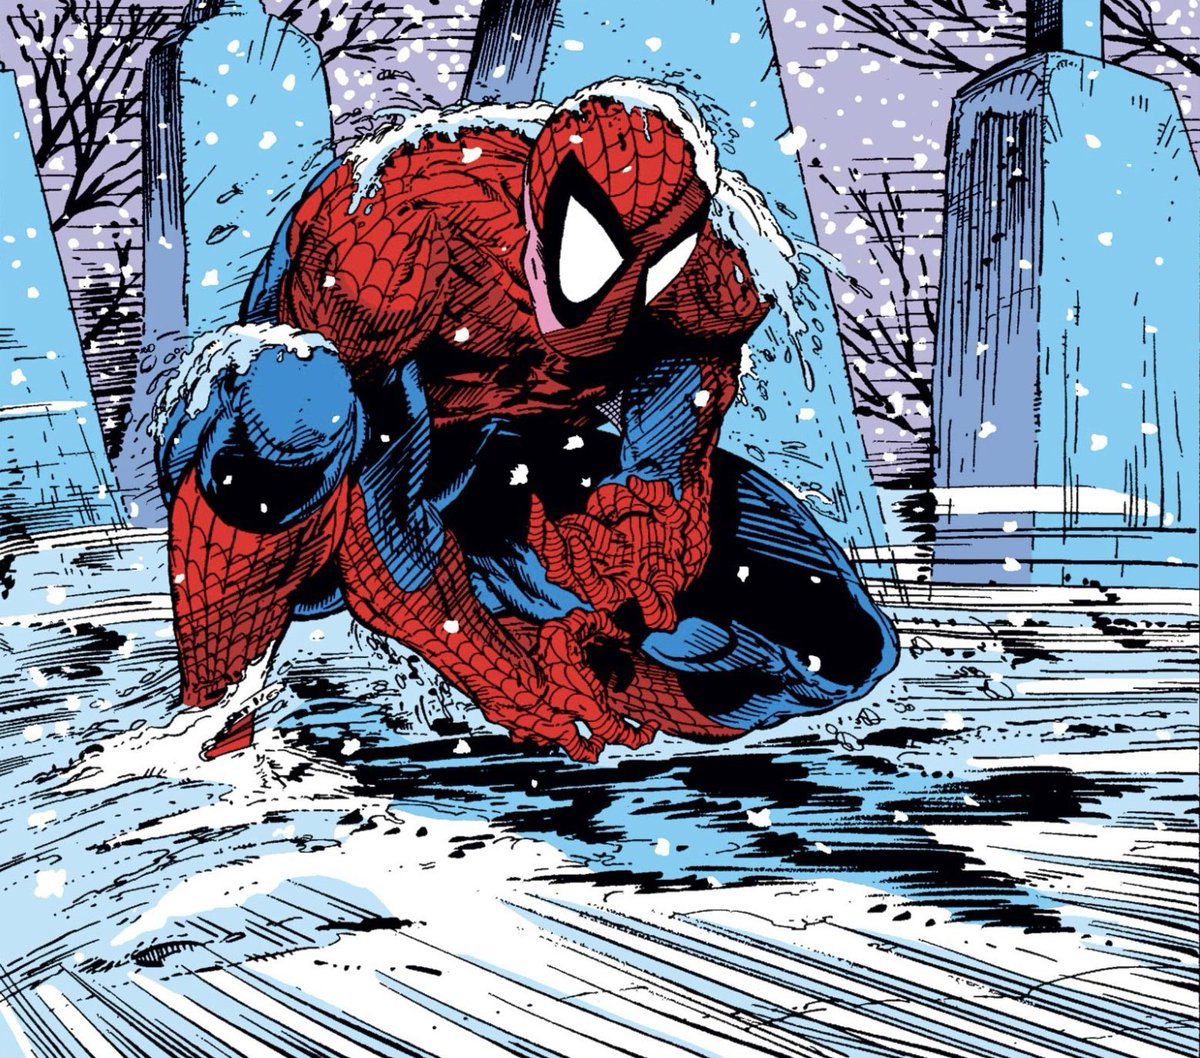 RT @CoolComicArt: Spider-Man by Todd McFarlane @Todd_McFarlane https://t.co/3PgfzHw3jw